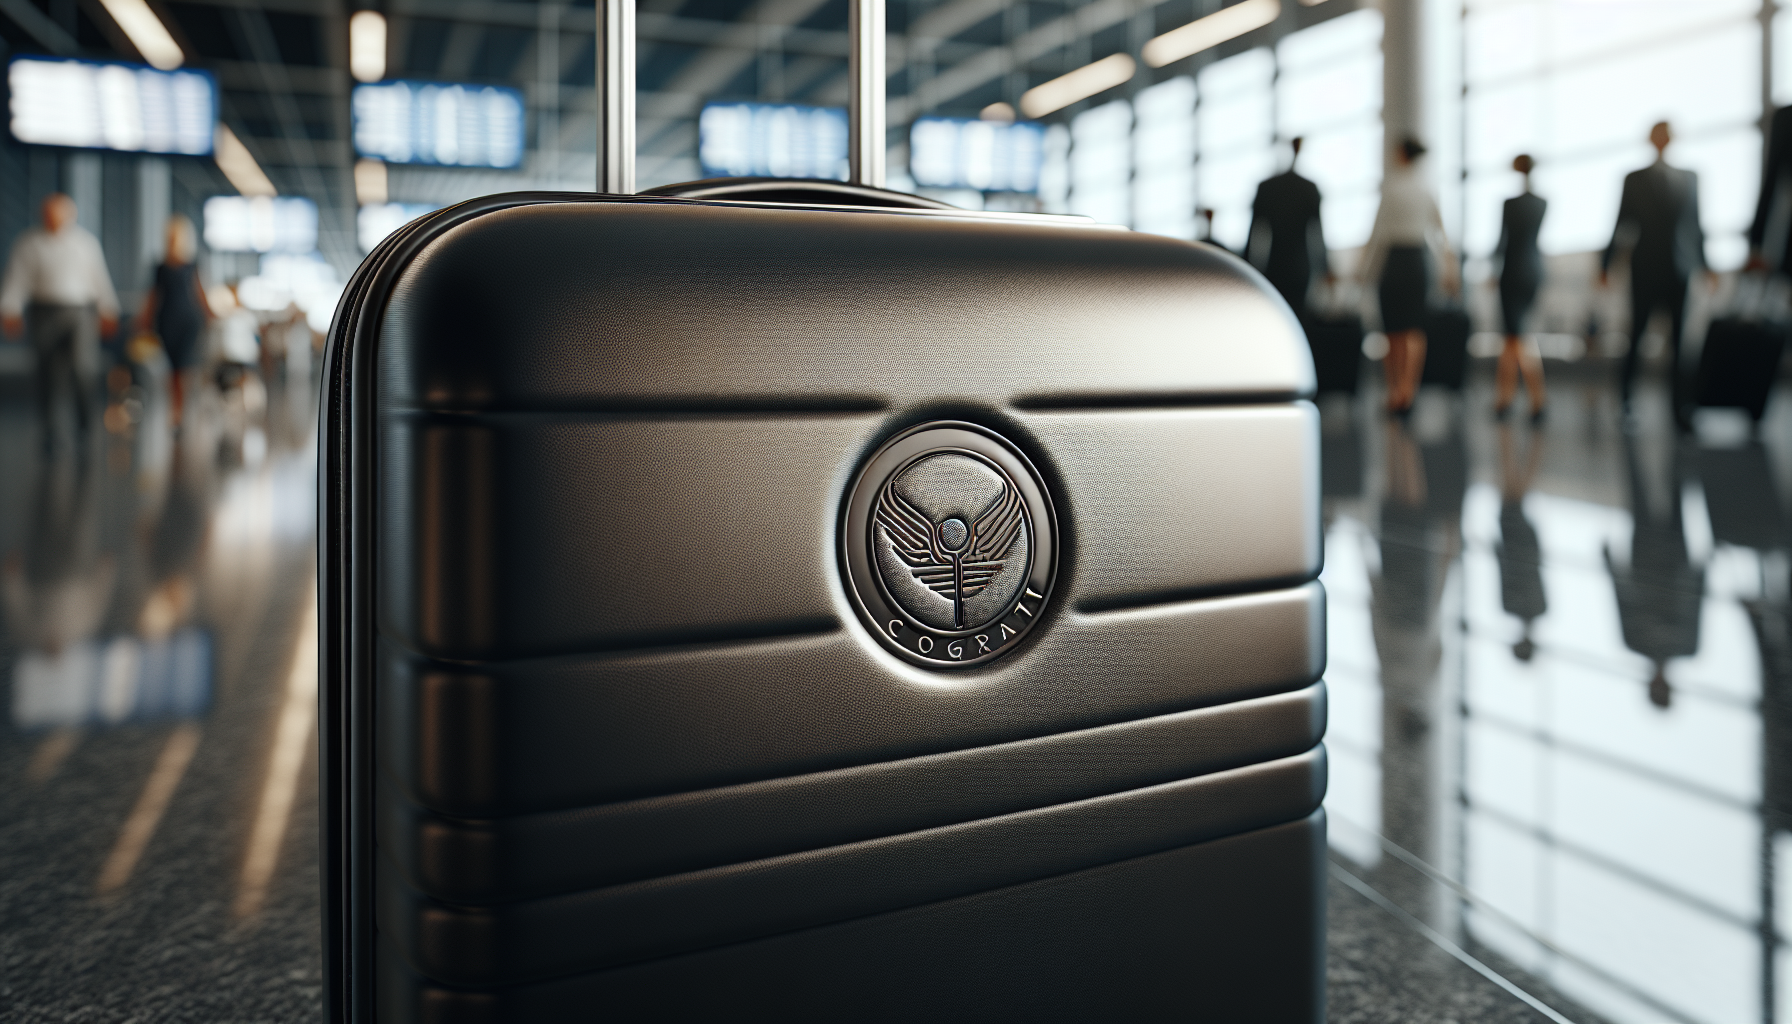 Corporate branding on custom luggage cover